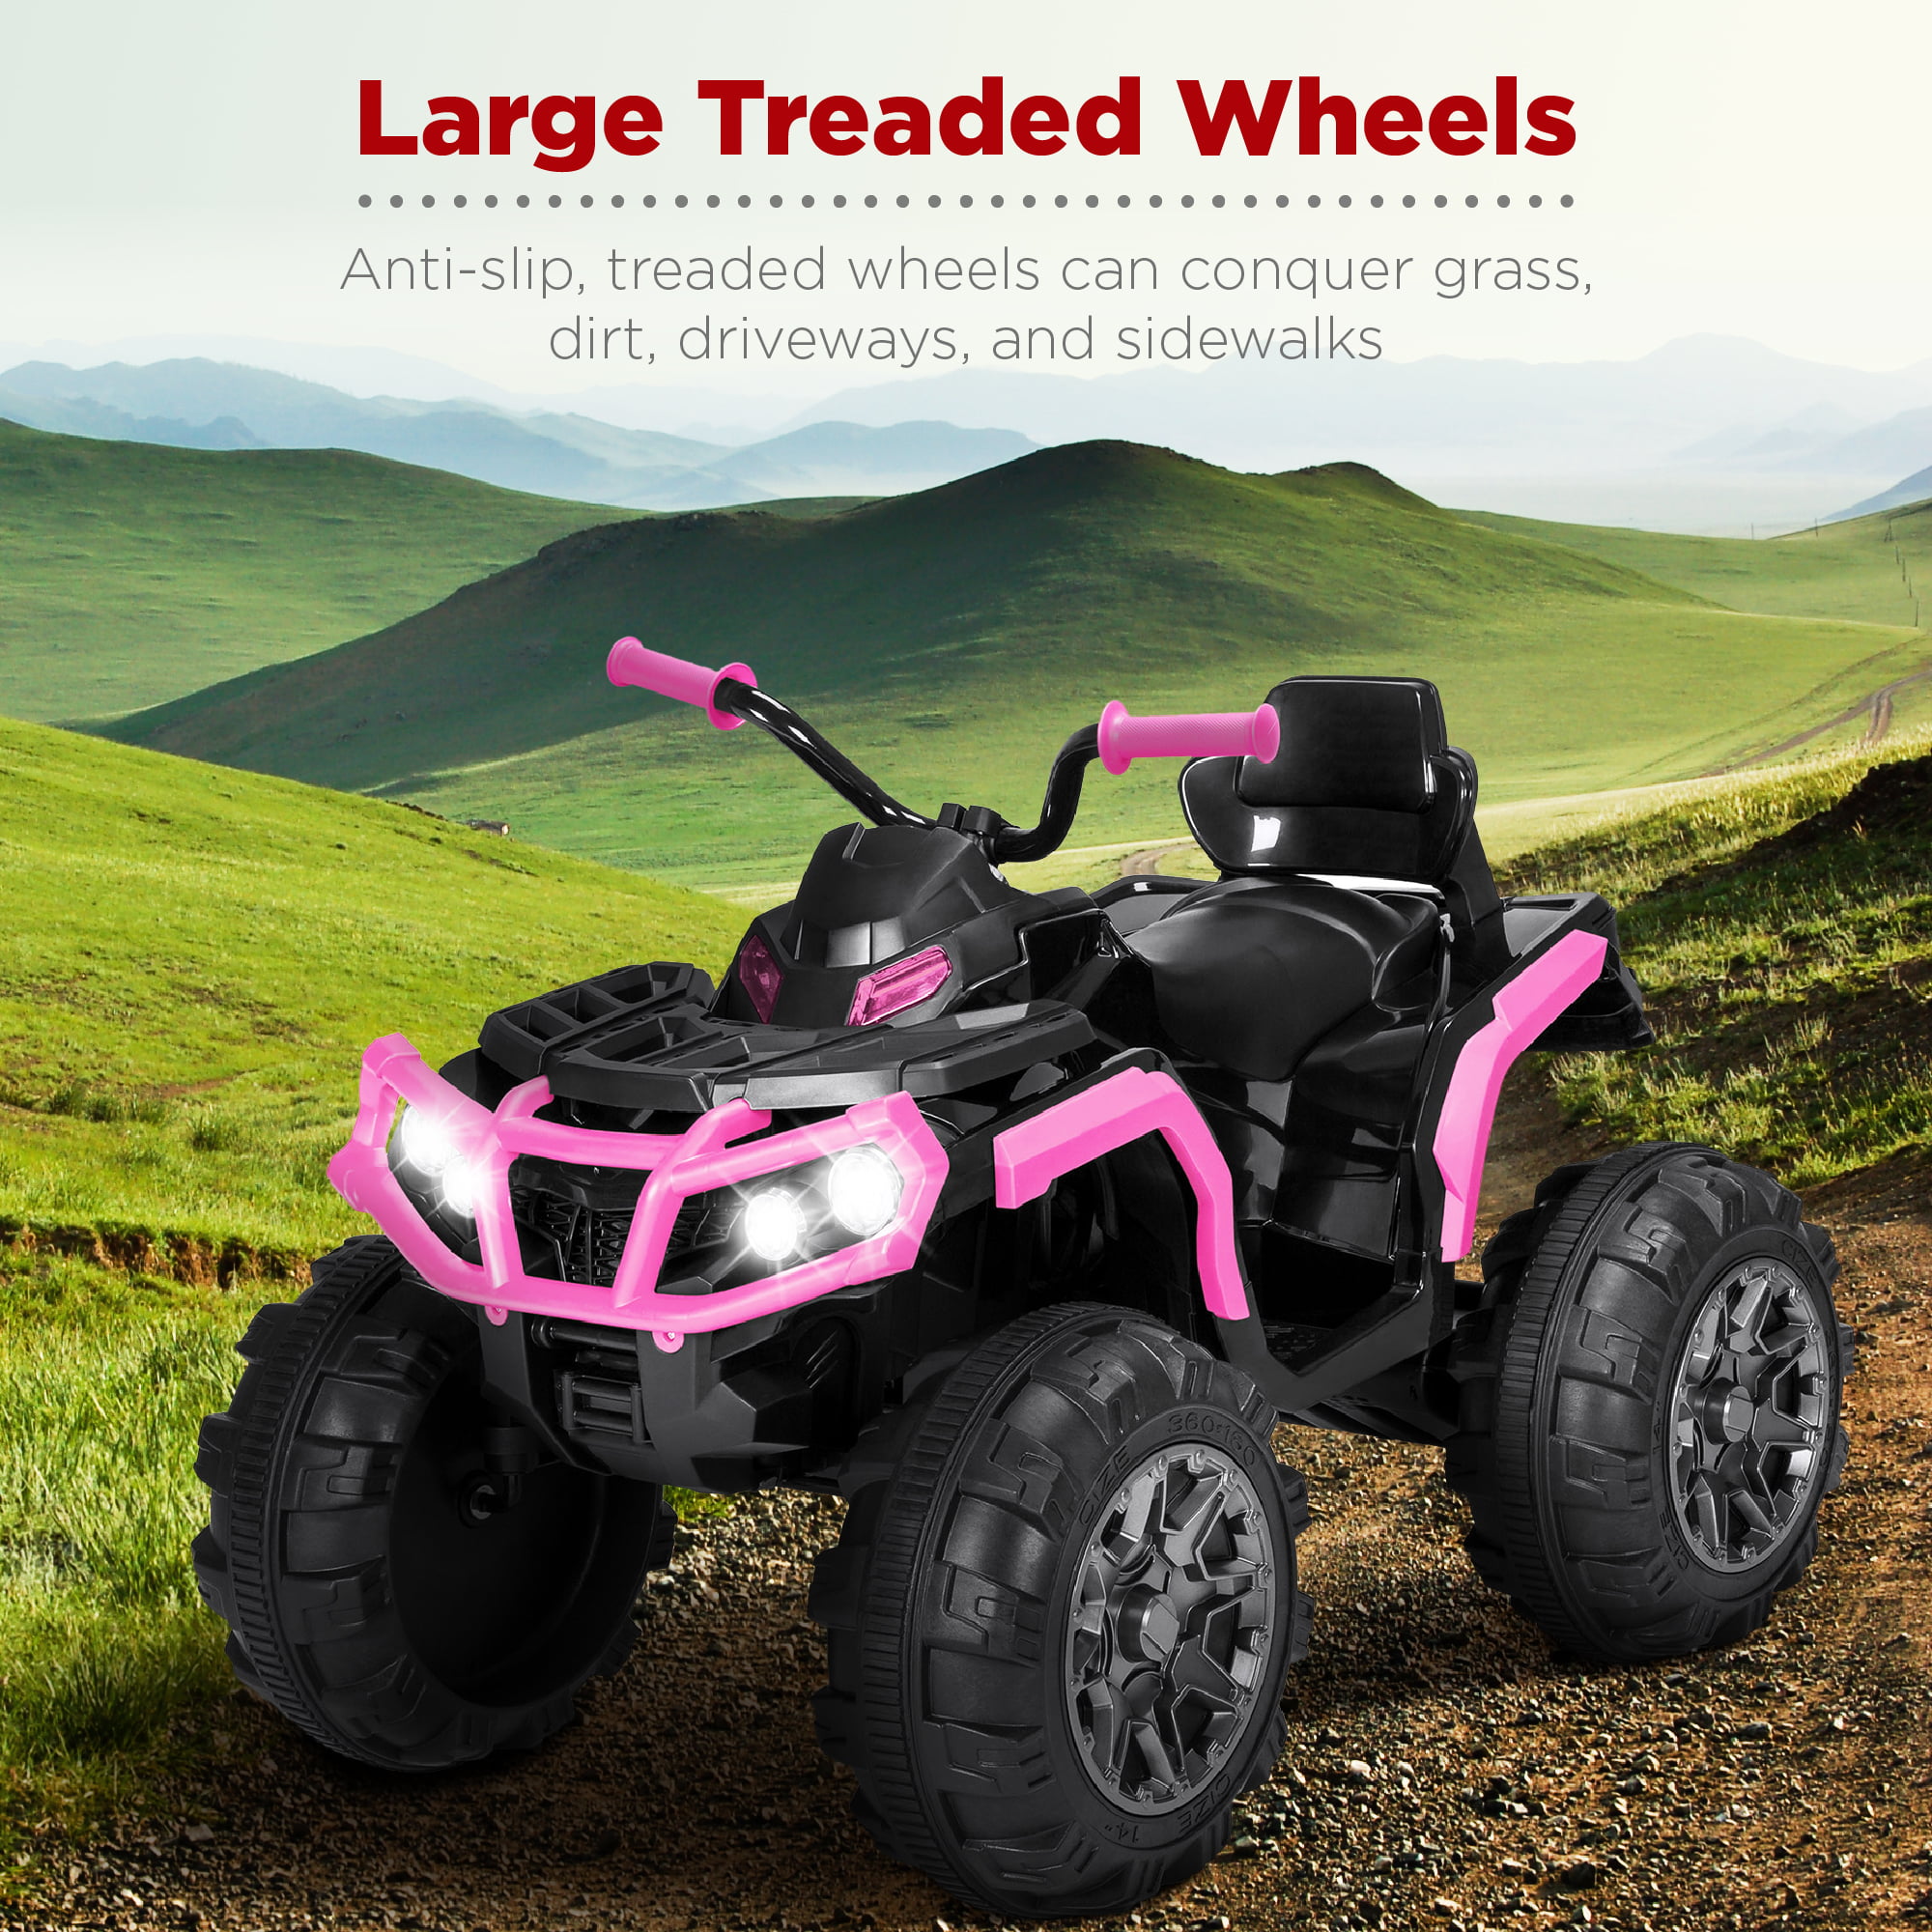 Best Choice Products 12V Kids Ride-On ATV Quad w/ Bluetooth, 3.7mph Max, Treaded Tires, LED Lights, Radio - Pink - 1